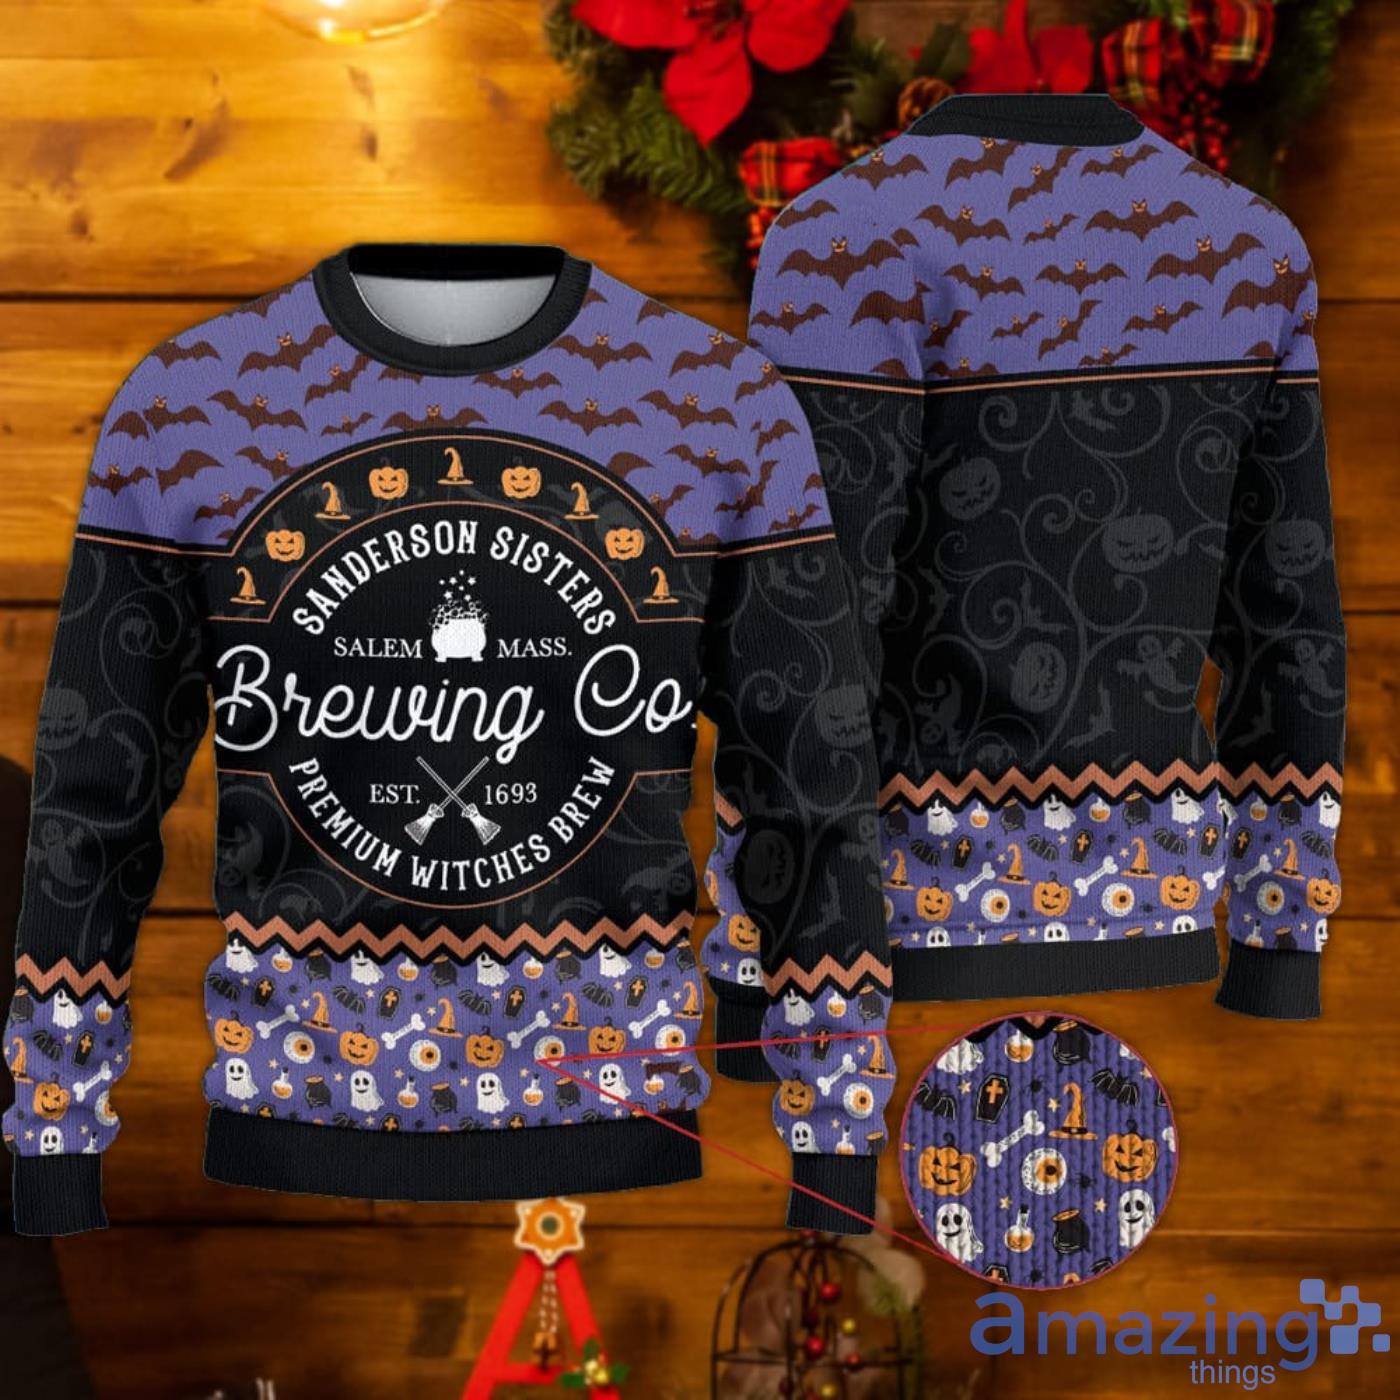 Hocus Pocus Brewing Co Sweater Sanderson Sisters Brewing Co Sweater Halloween Sweater Product Photo 1